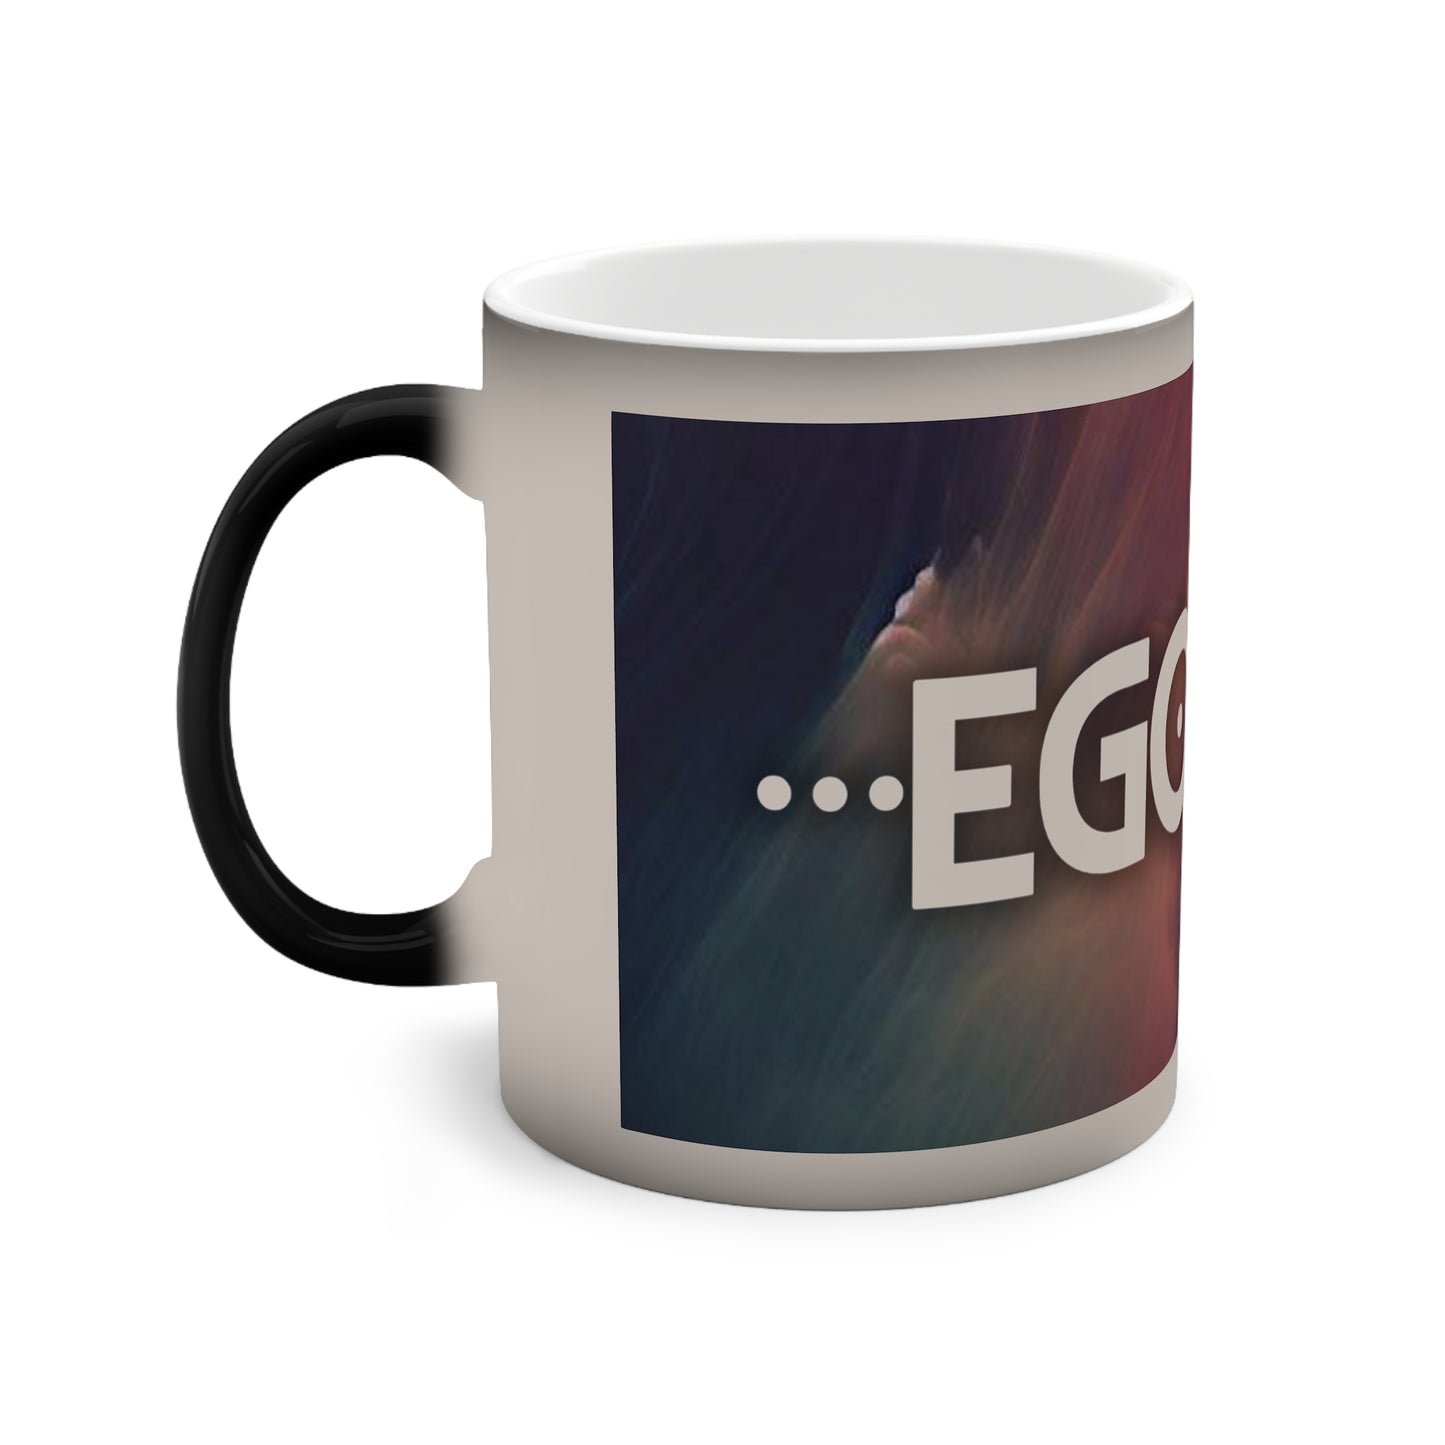 Mug EgoKin 2 (thermo reactif) - EGOKIN